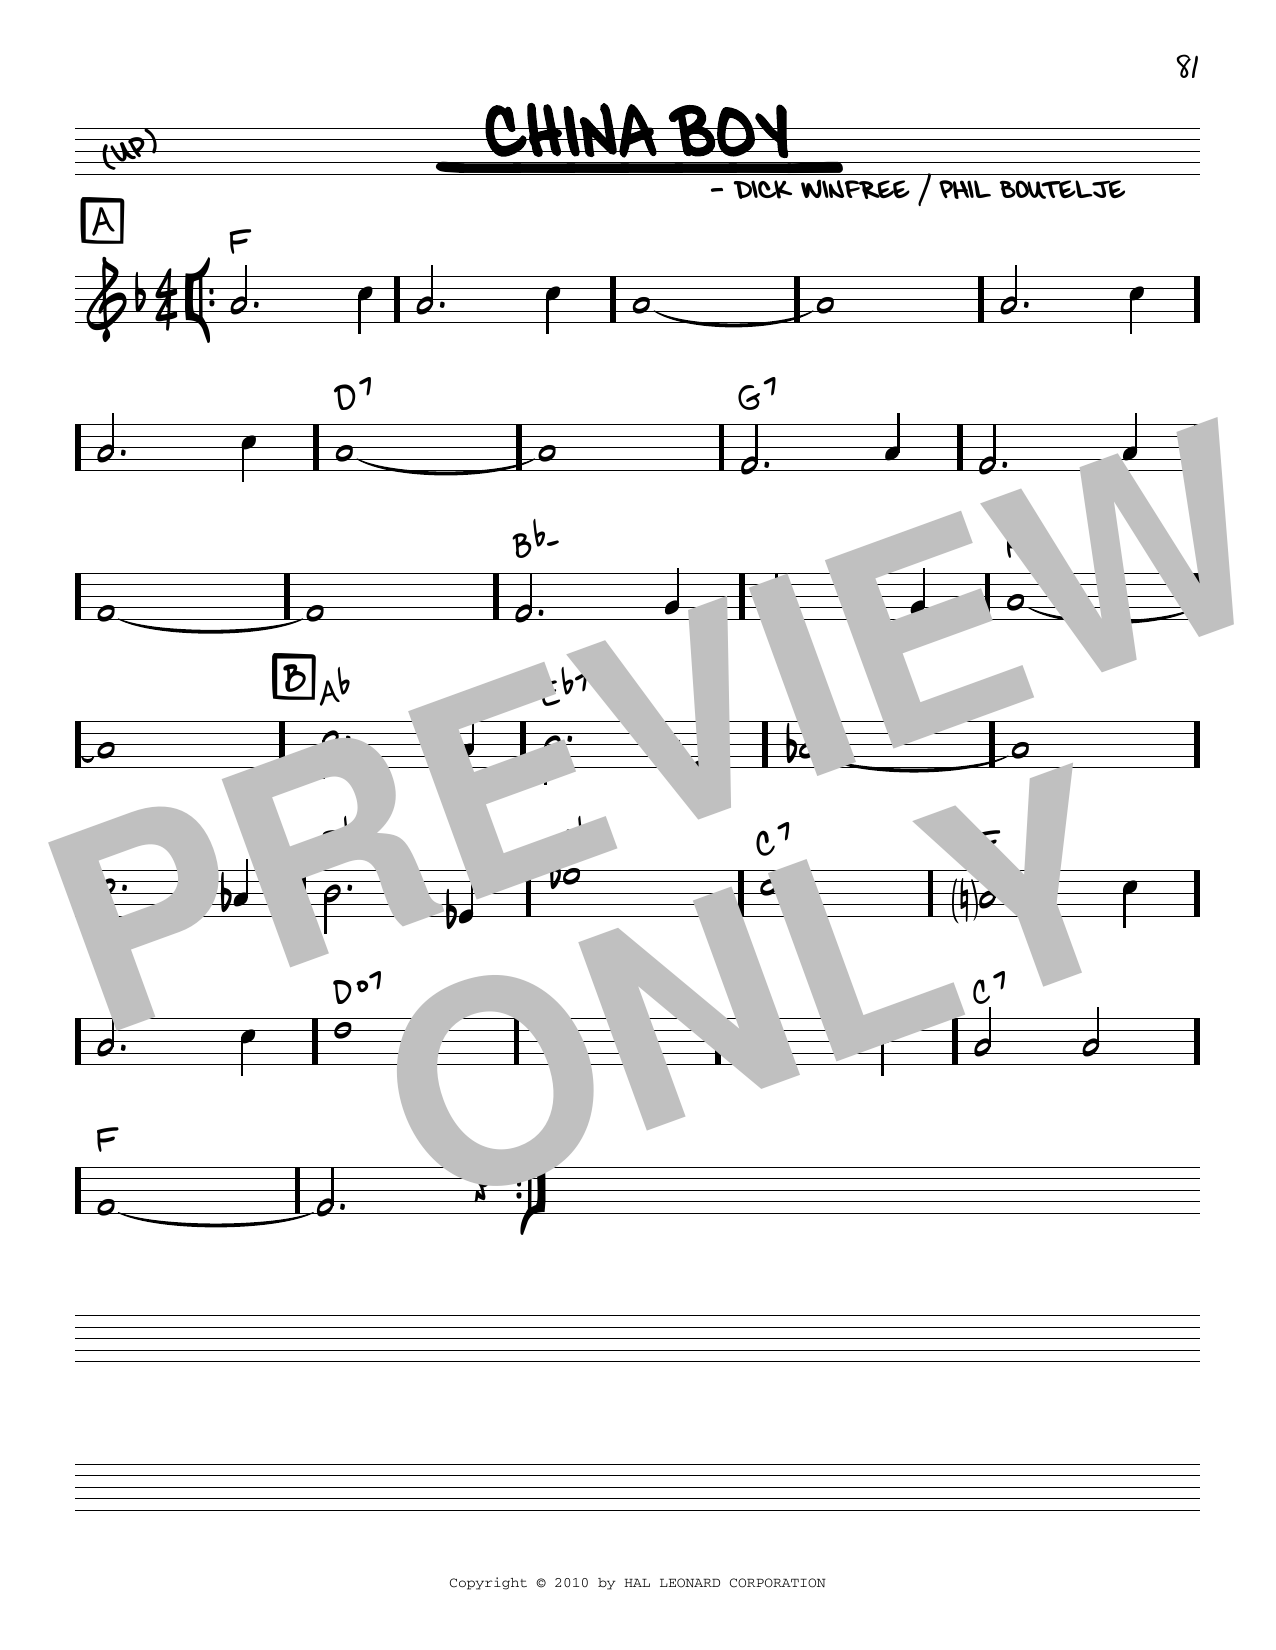 Phil Boutelje China Boy (arr. Robert Rawlins) Sheet Music Notes & Chords for Real Book – Melody, Lyrics & Chords - Download or Print PDF